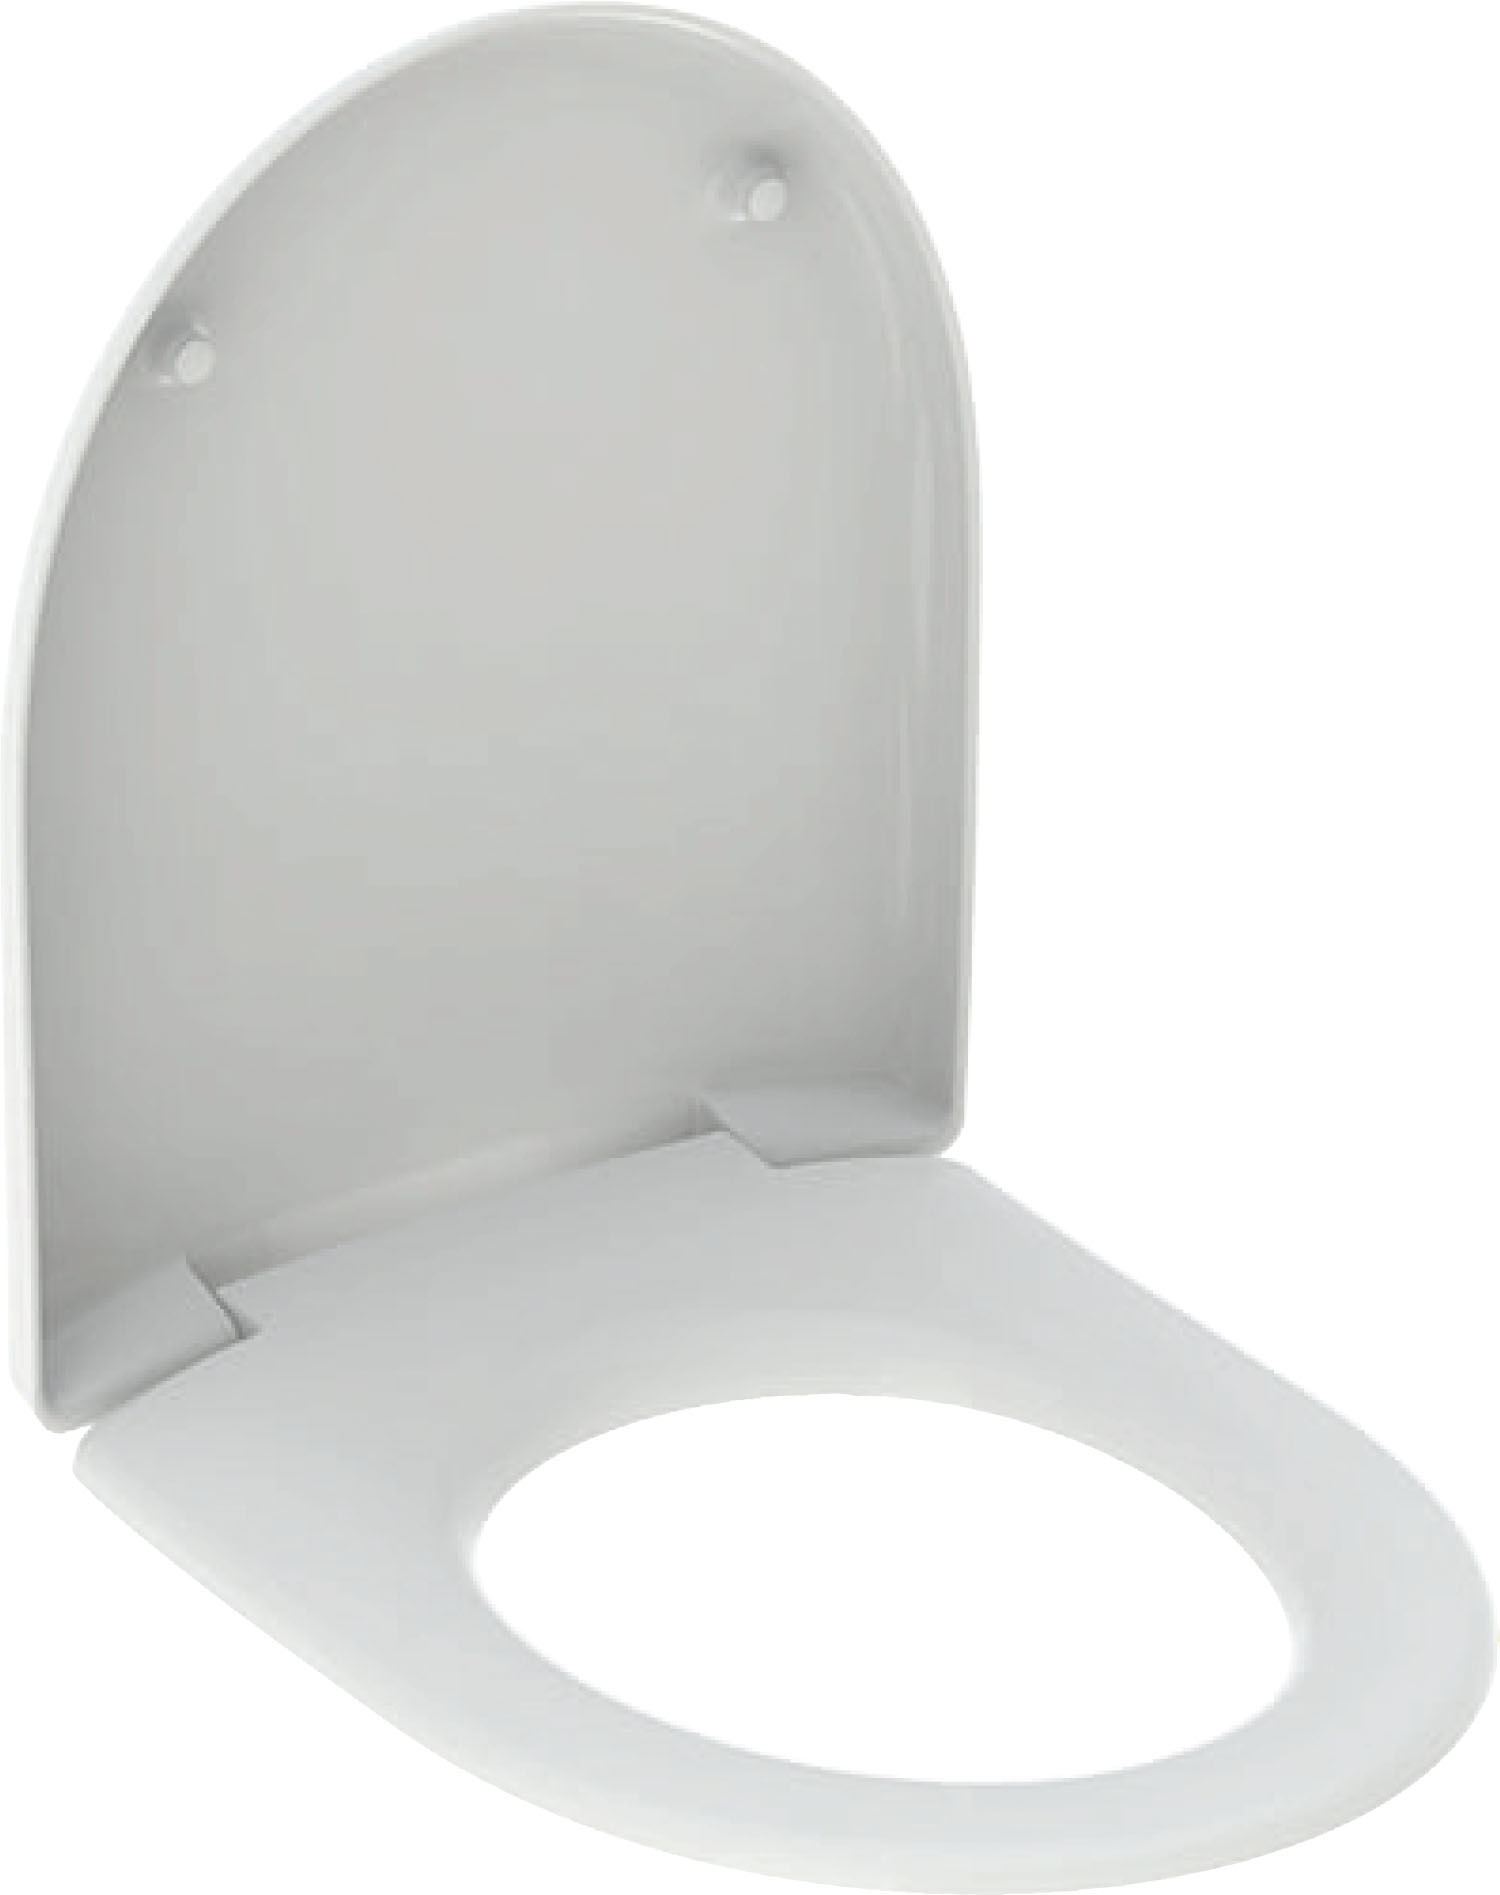 Geberit Renova WC siège 573010000 blanc, charnières Inox